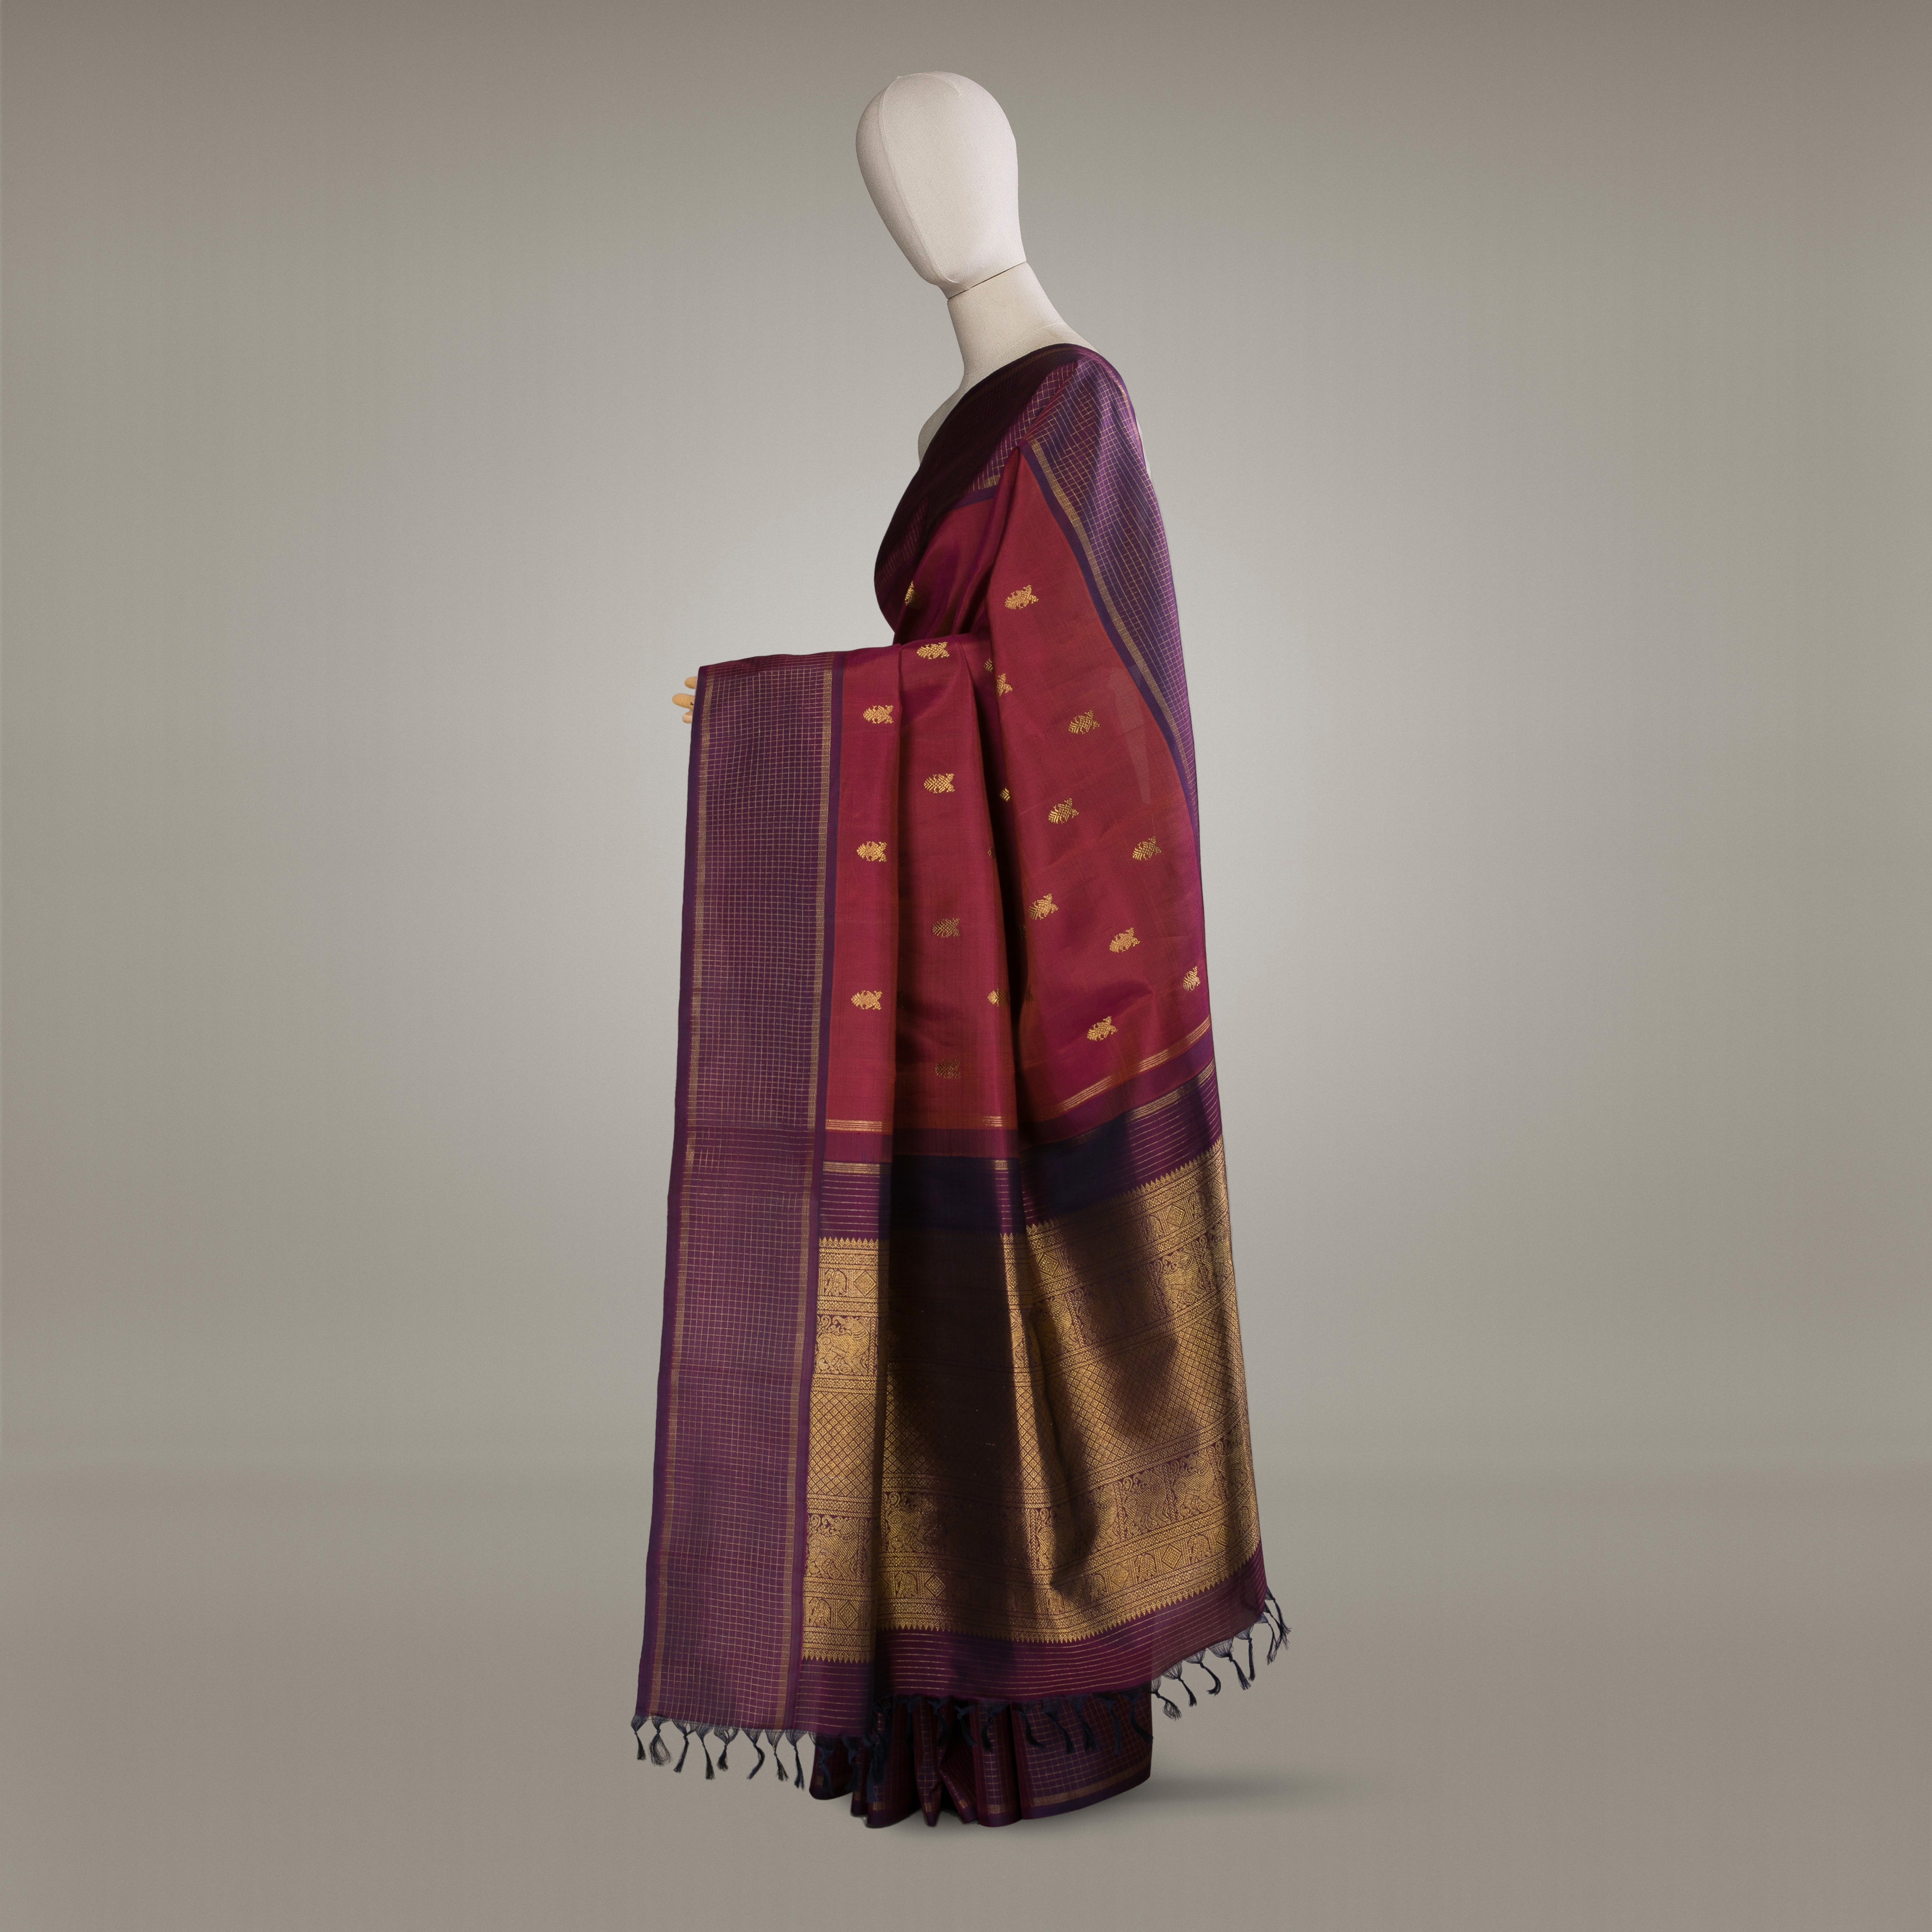 Kanakavalli Kanjivaram Silk Sari 23-595-HS001-09561 - Drape View1